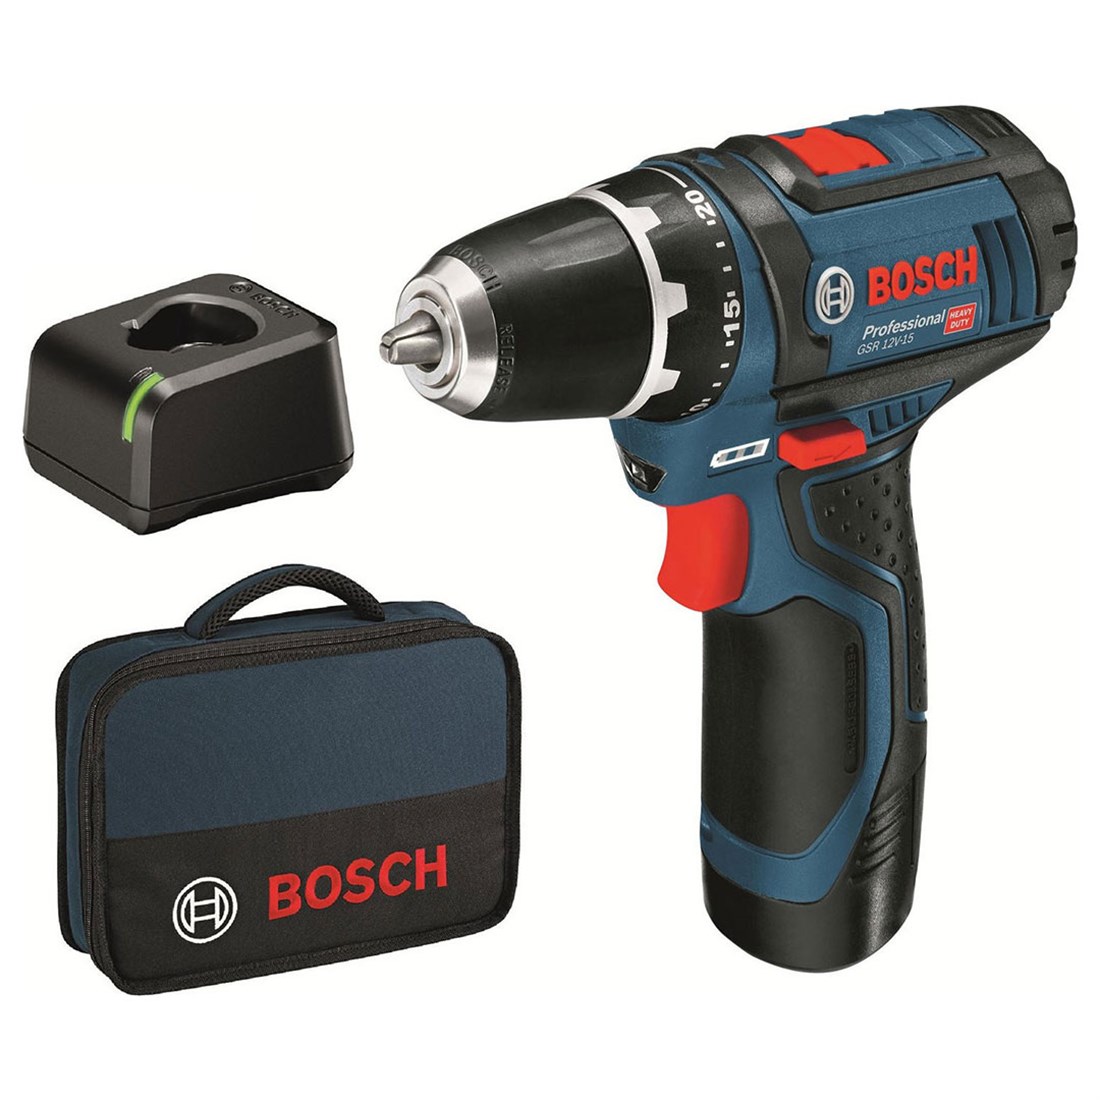 Bosch Professional Gsr 12v-15 2.0 Ah Tek Akülü Delme Vidalama Makinesi -  0615990l5g - 7Kat